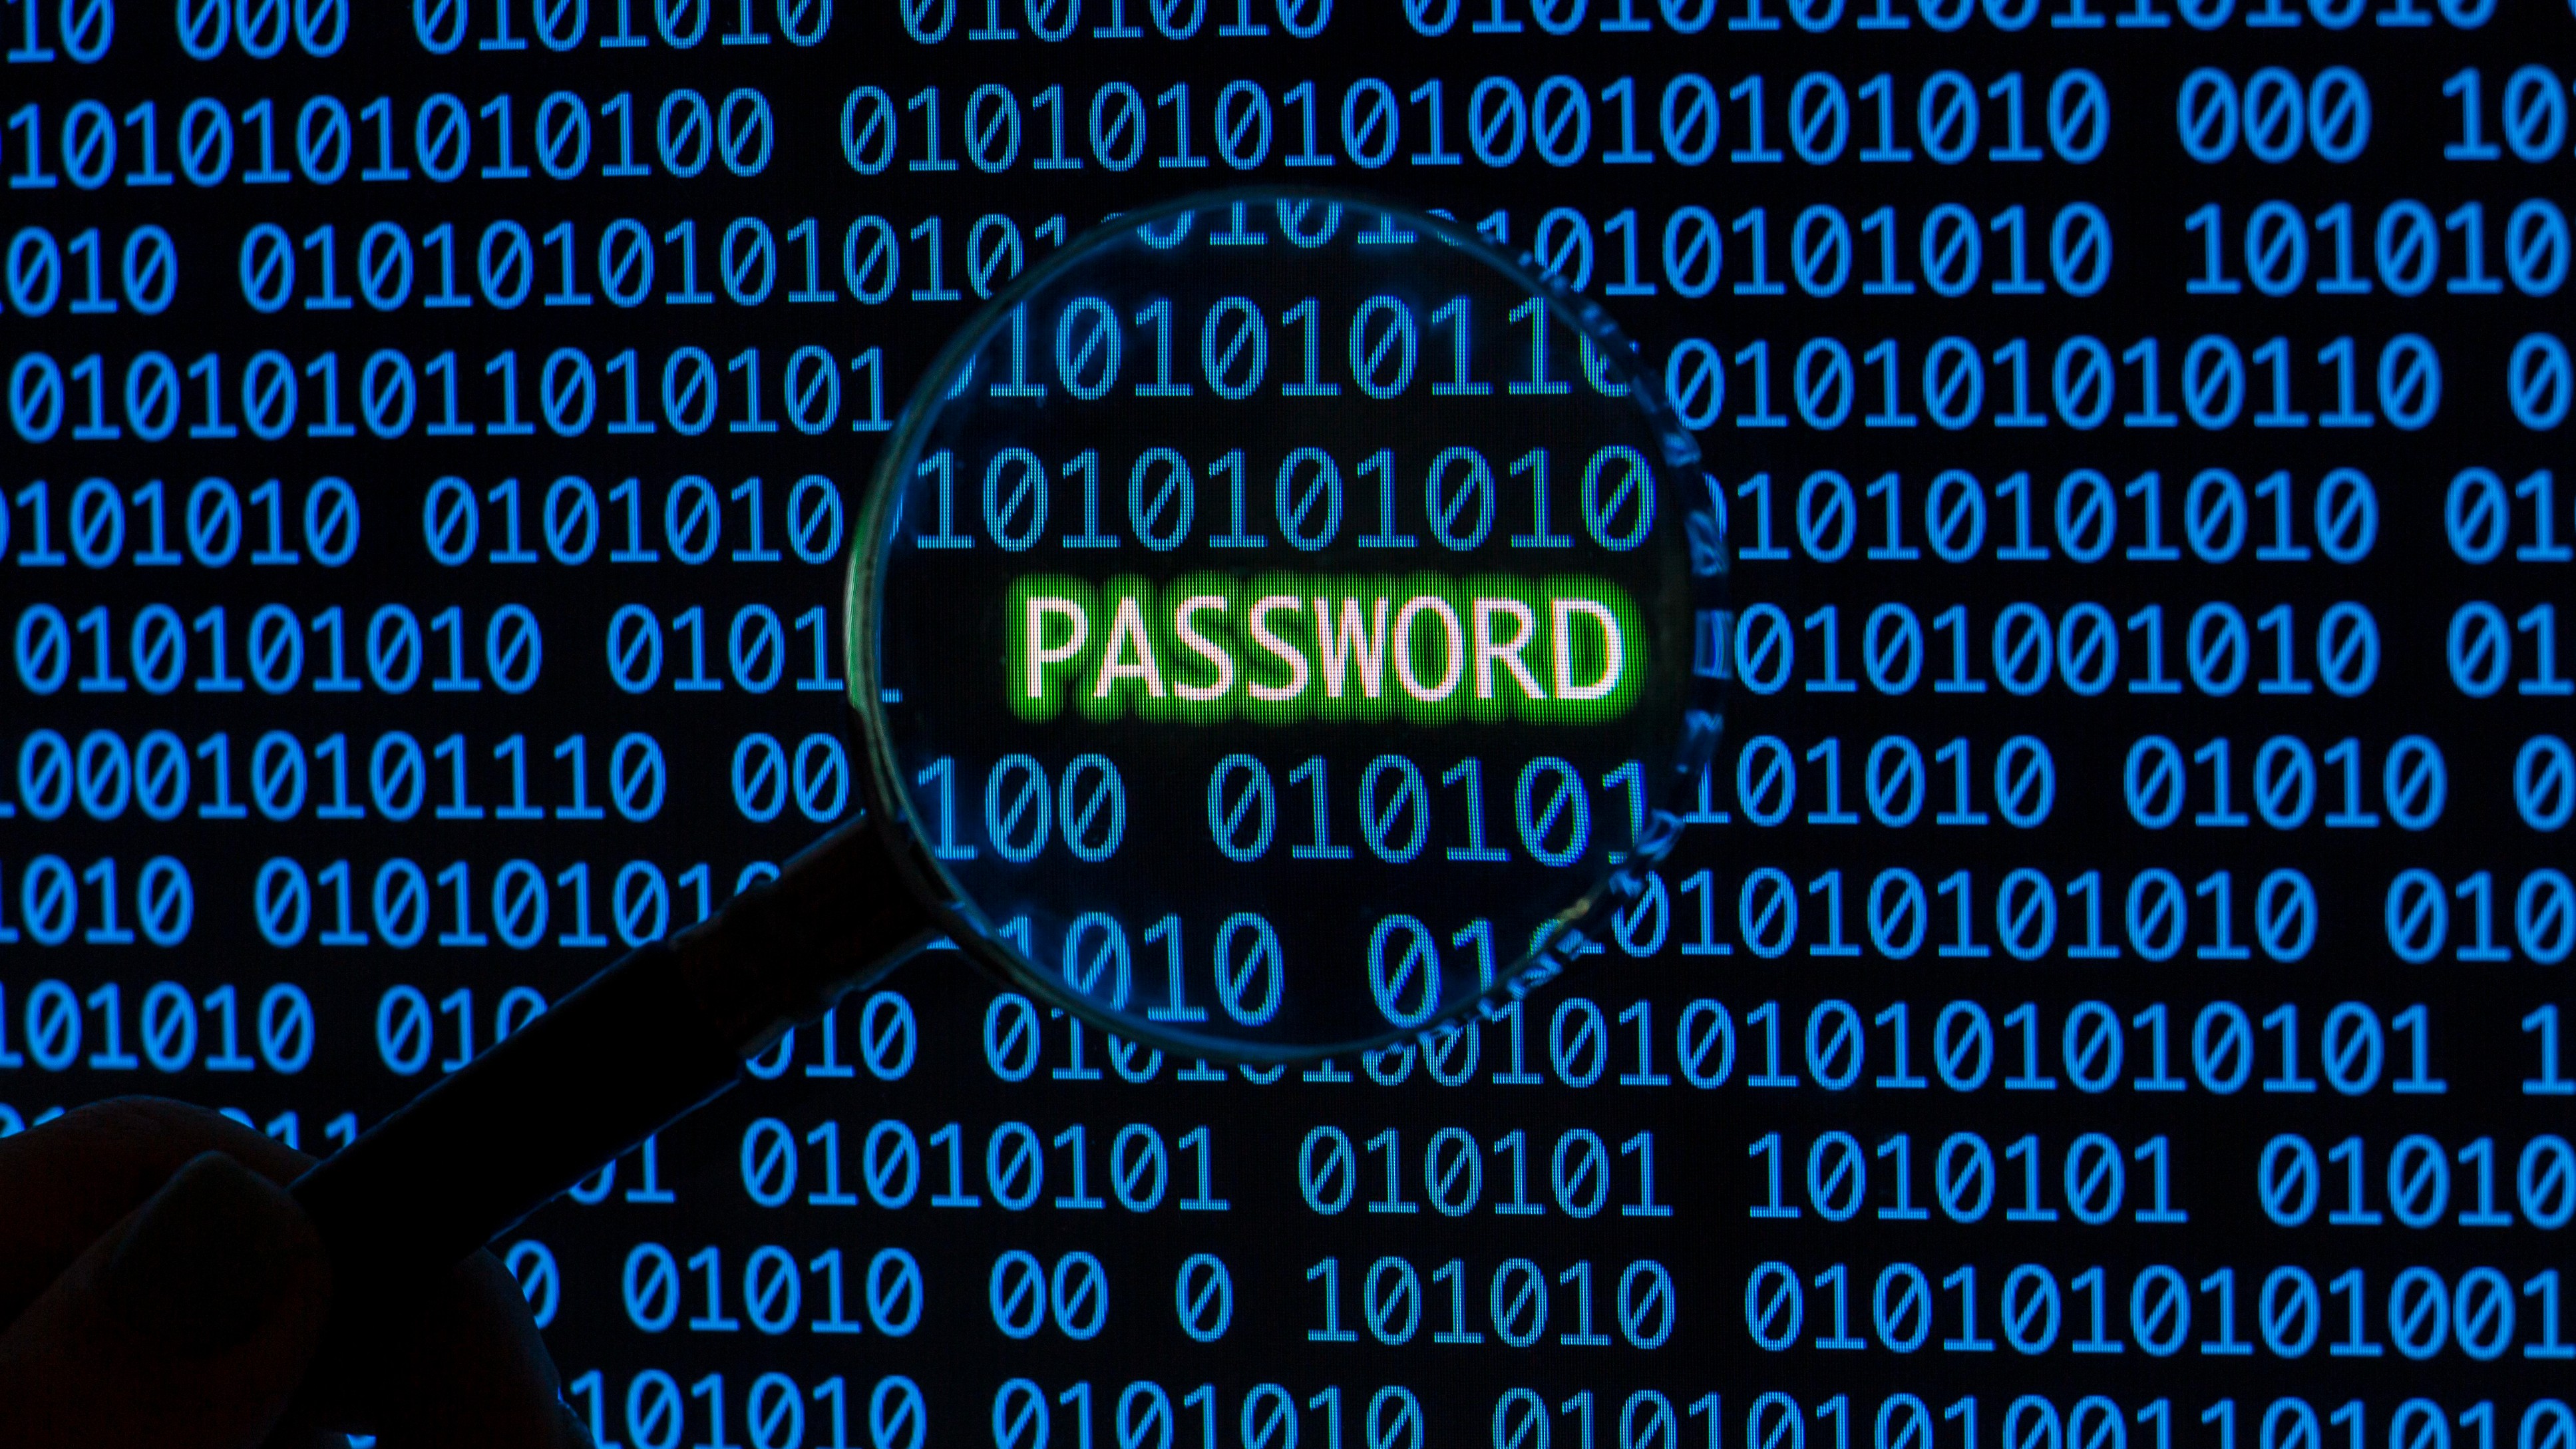 Common password. Бинарный код фото. Хакеры которые взламывают пароли. Password photo. Advanced persistent threat.